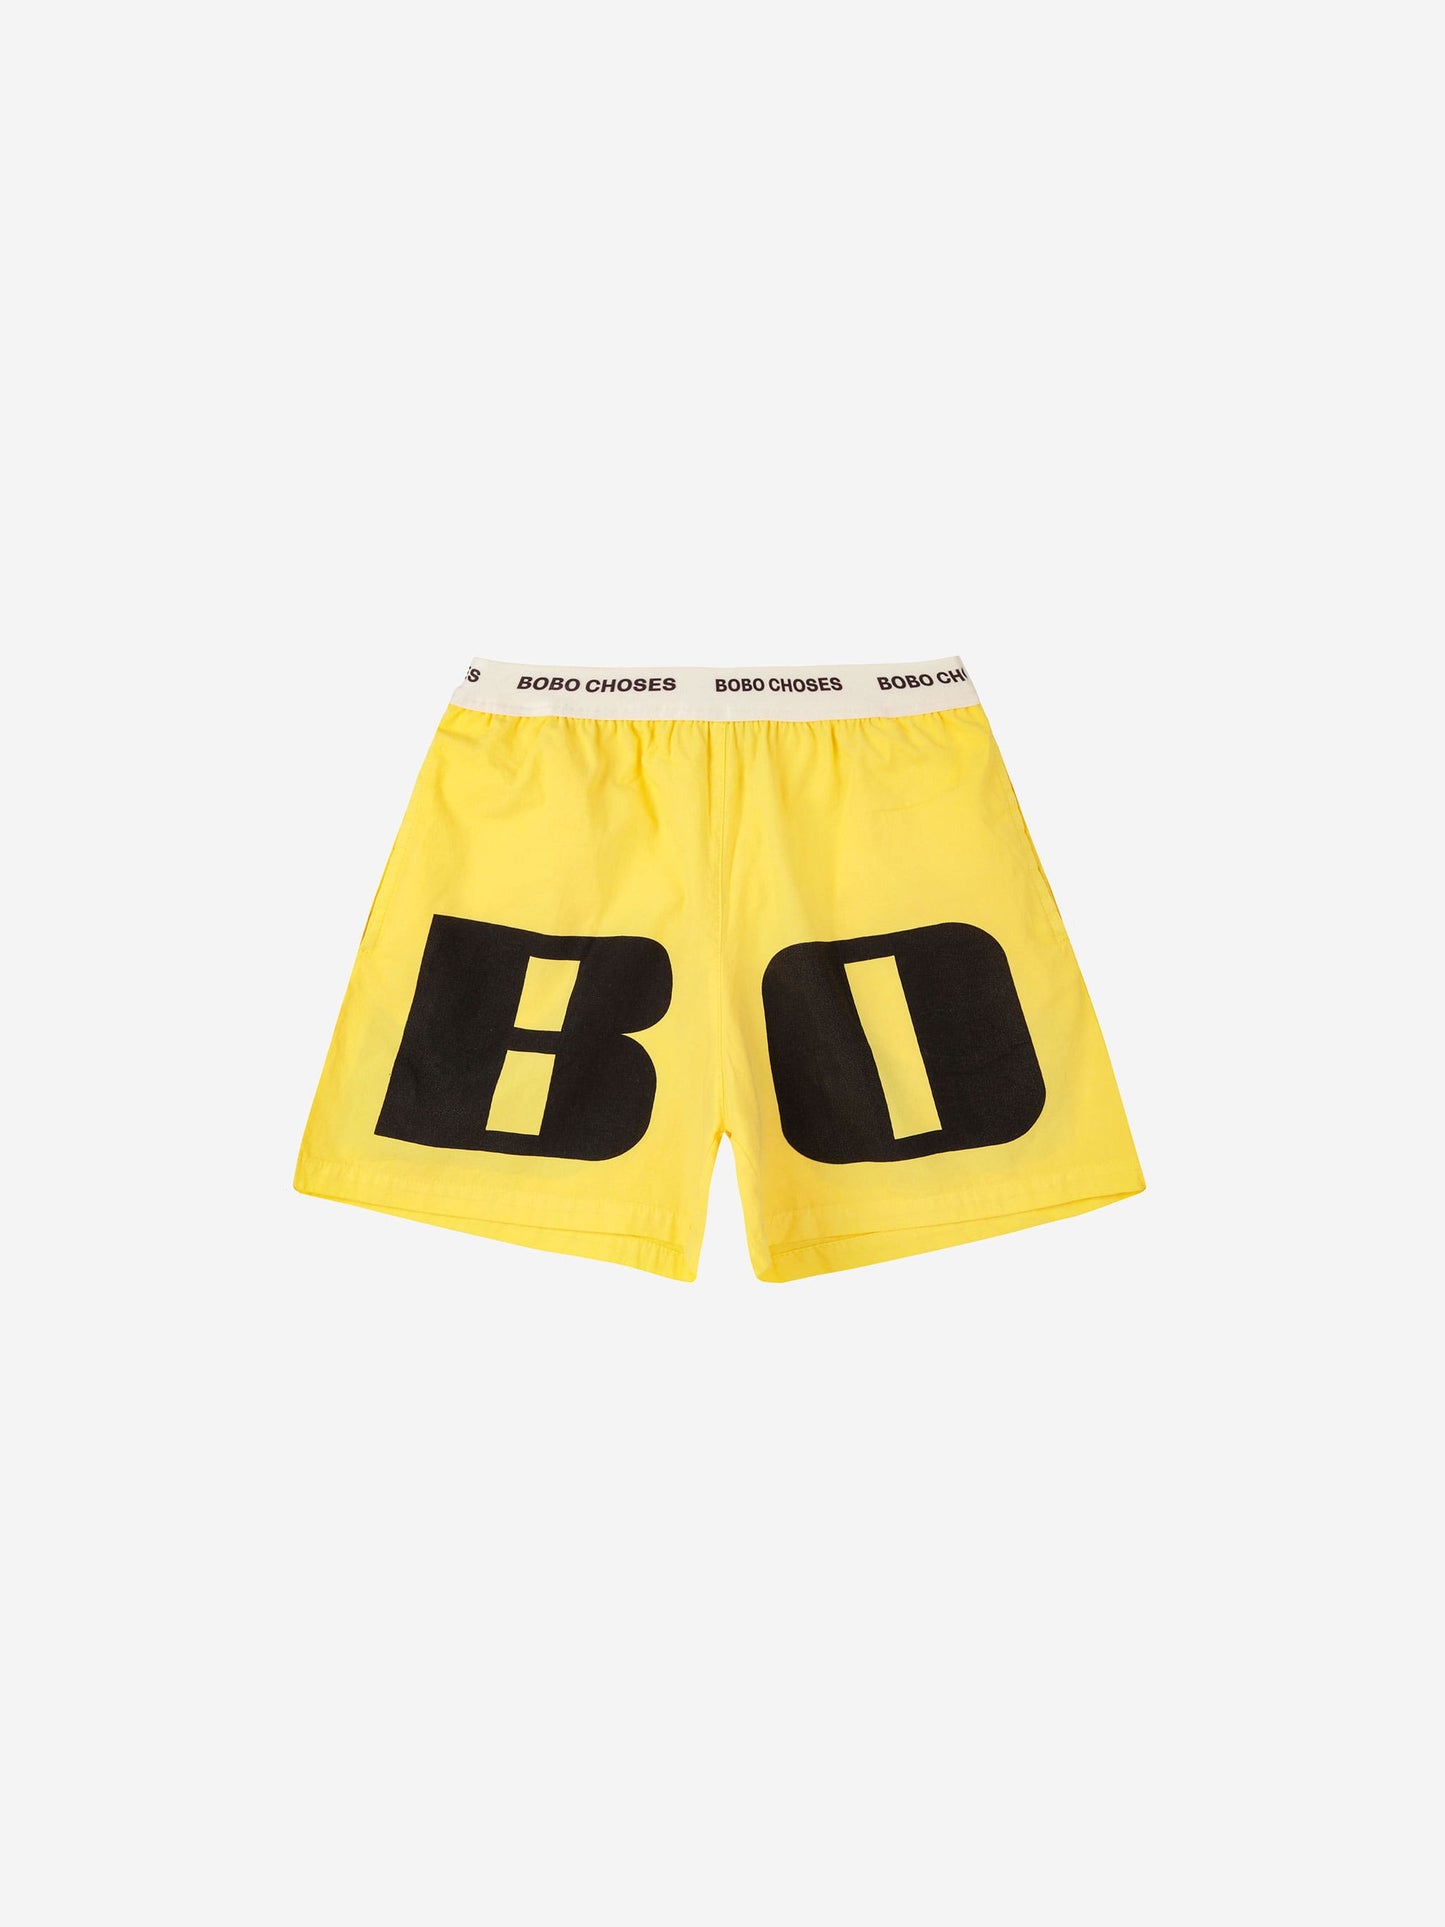 Bobo sporty woven shorts